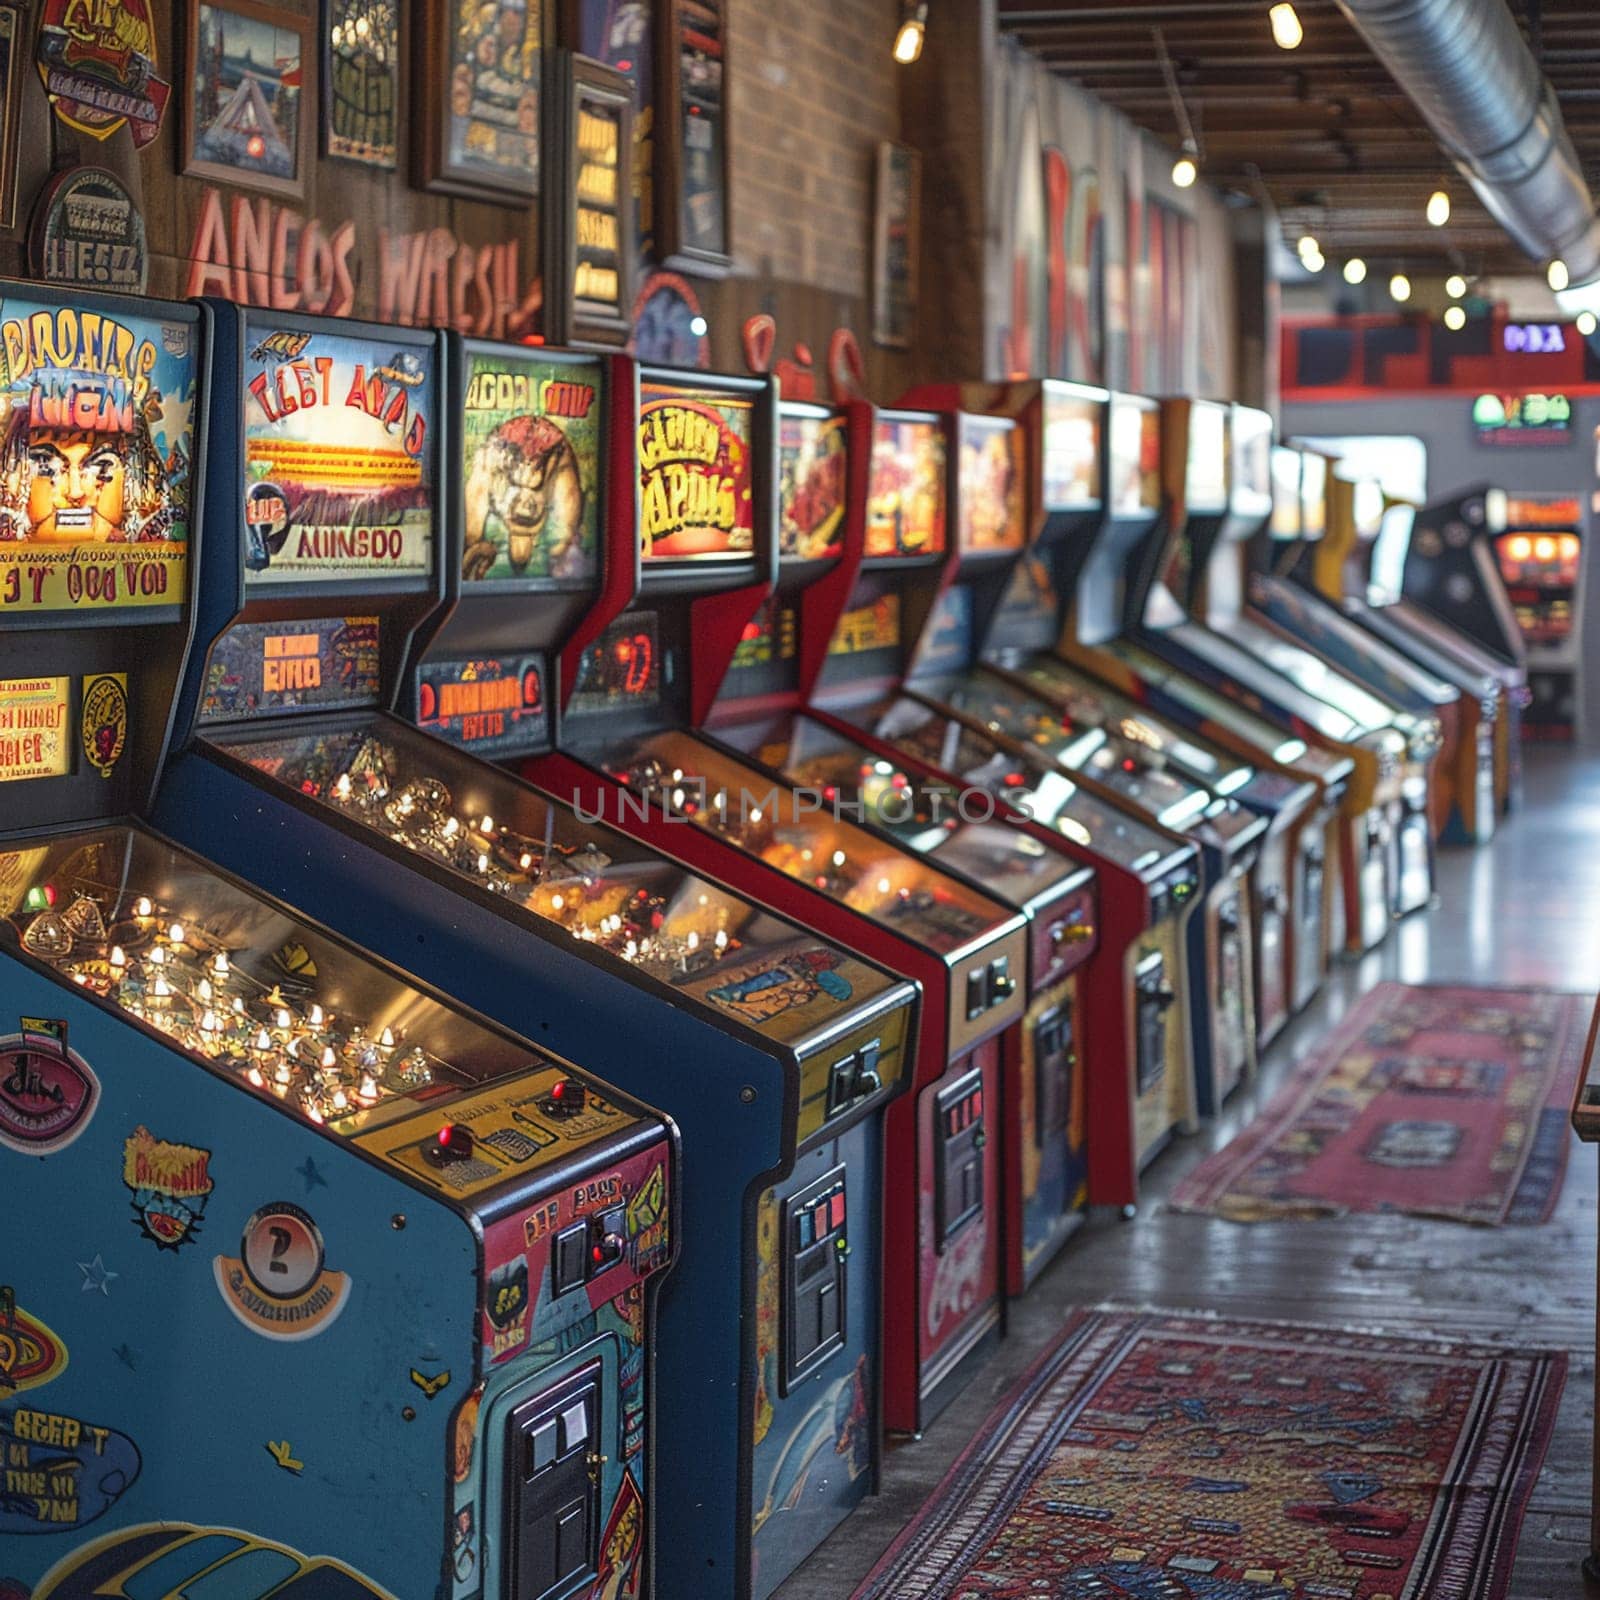 Nostalgic Arcade Room Rekindles Classic Fun in Business of Retro Gaming, Arcade tokens and classic joysticks rekindle a story of classic fun and retro gaming in the nostalgic arcade room business.